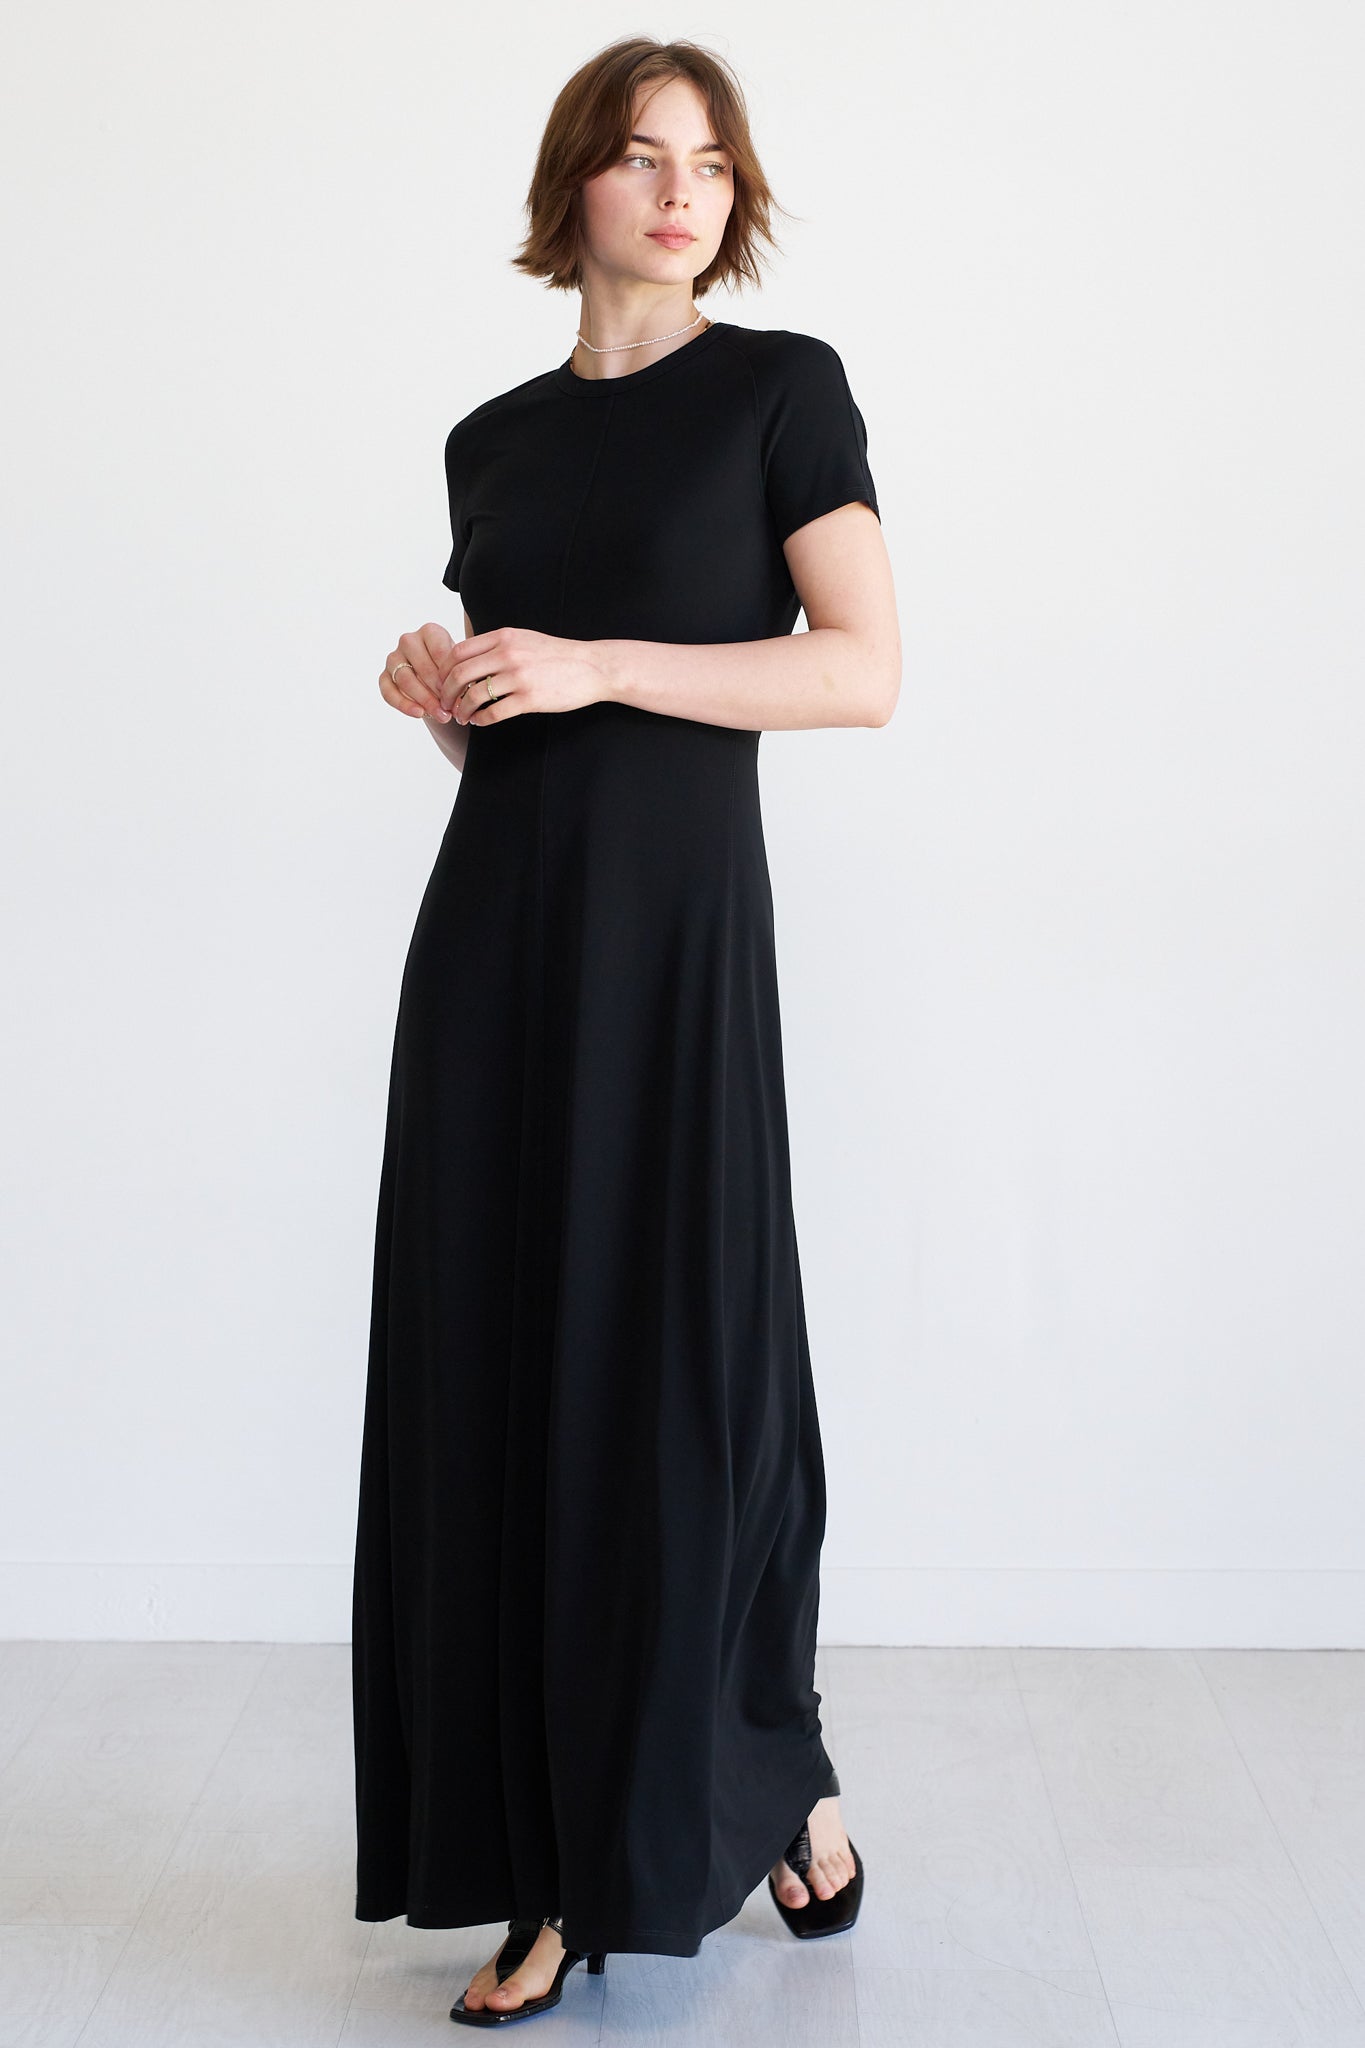 TOTEME - Fluid Jersey Dress, Black